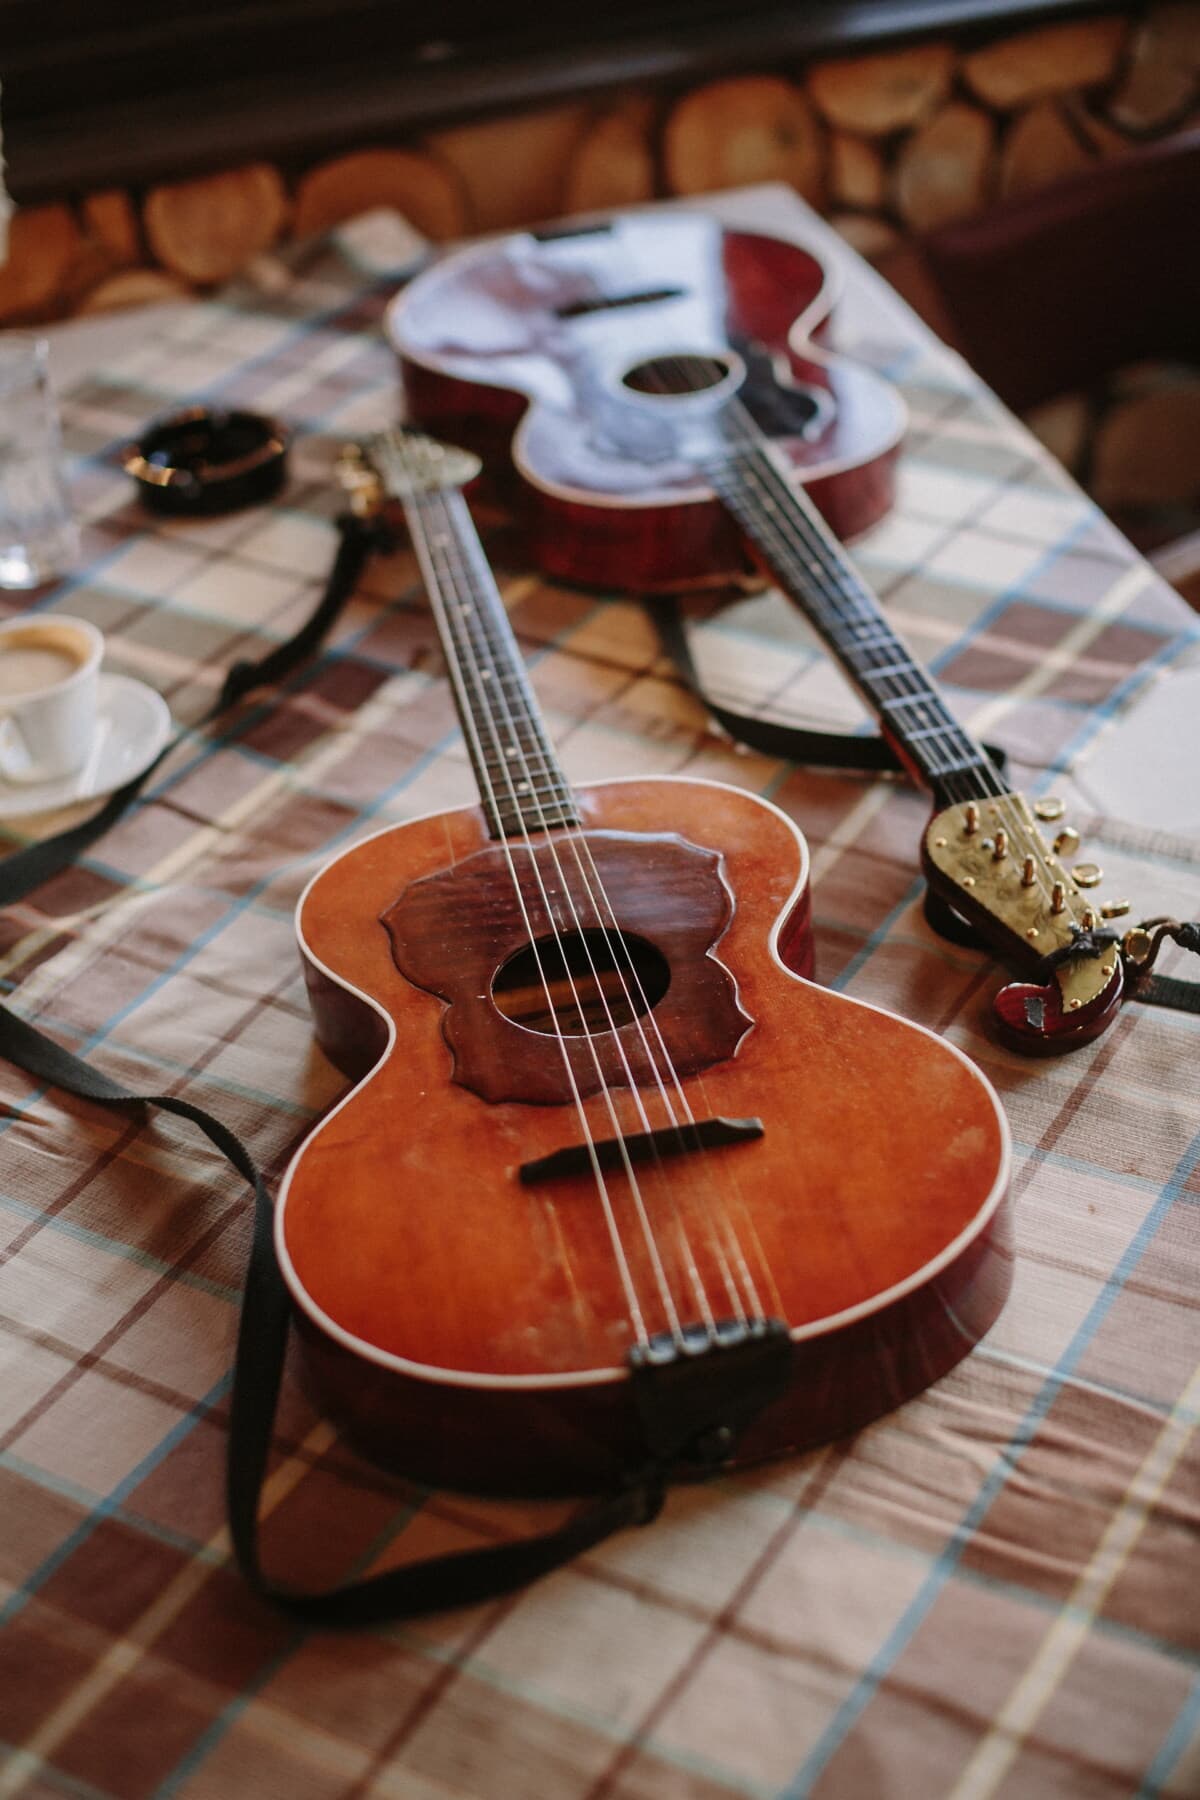 akustik, gitar, zaman kuno, buatan tangan, meja, taplak meja, musik, kayu, musisi, instrumen